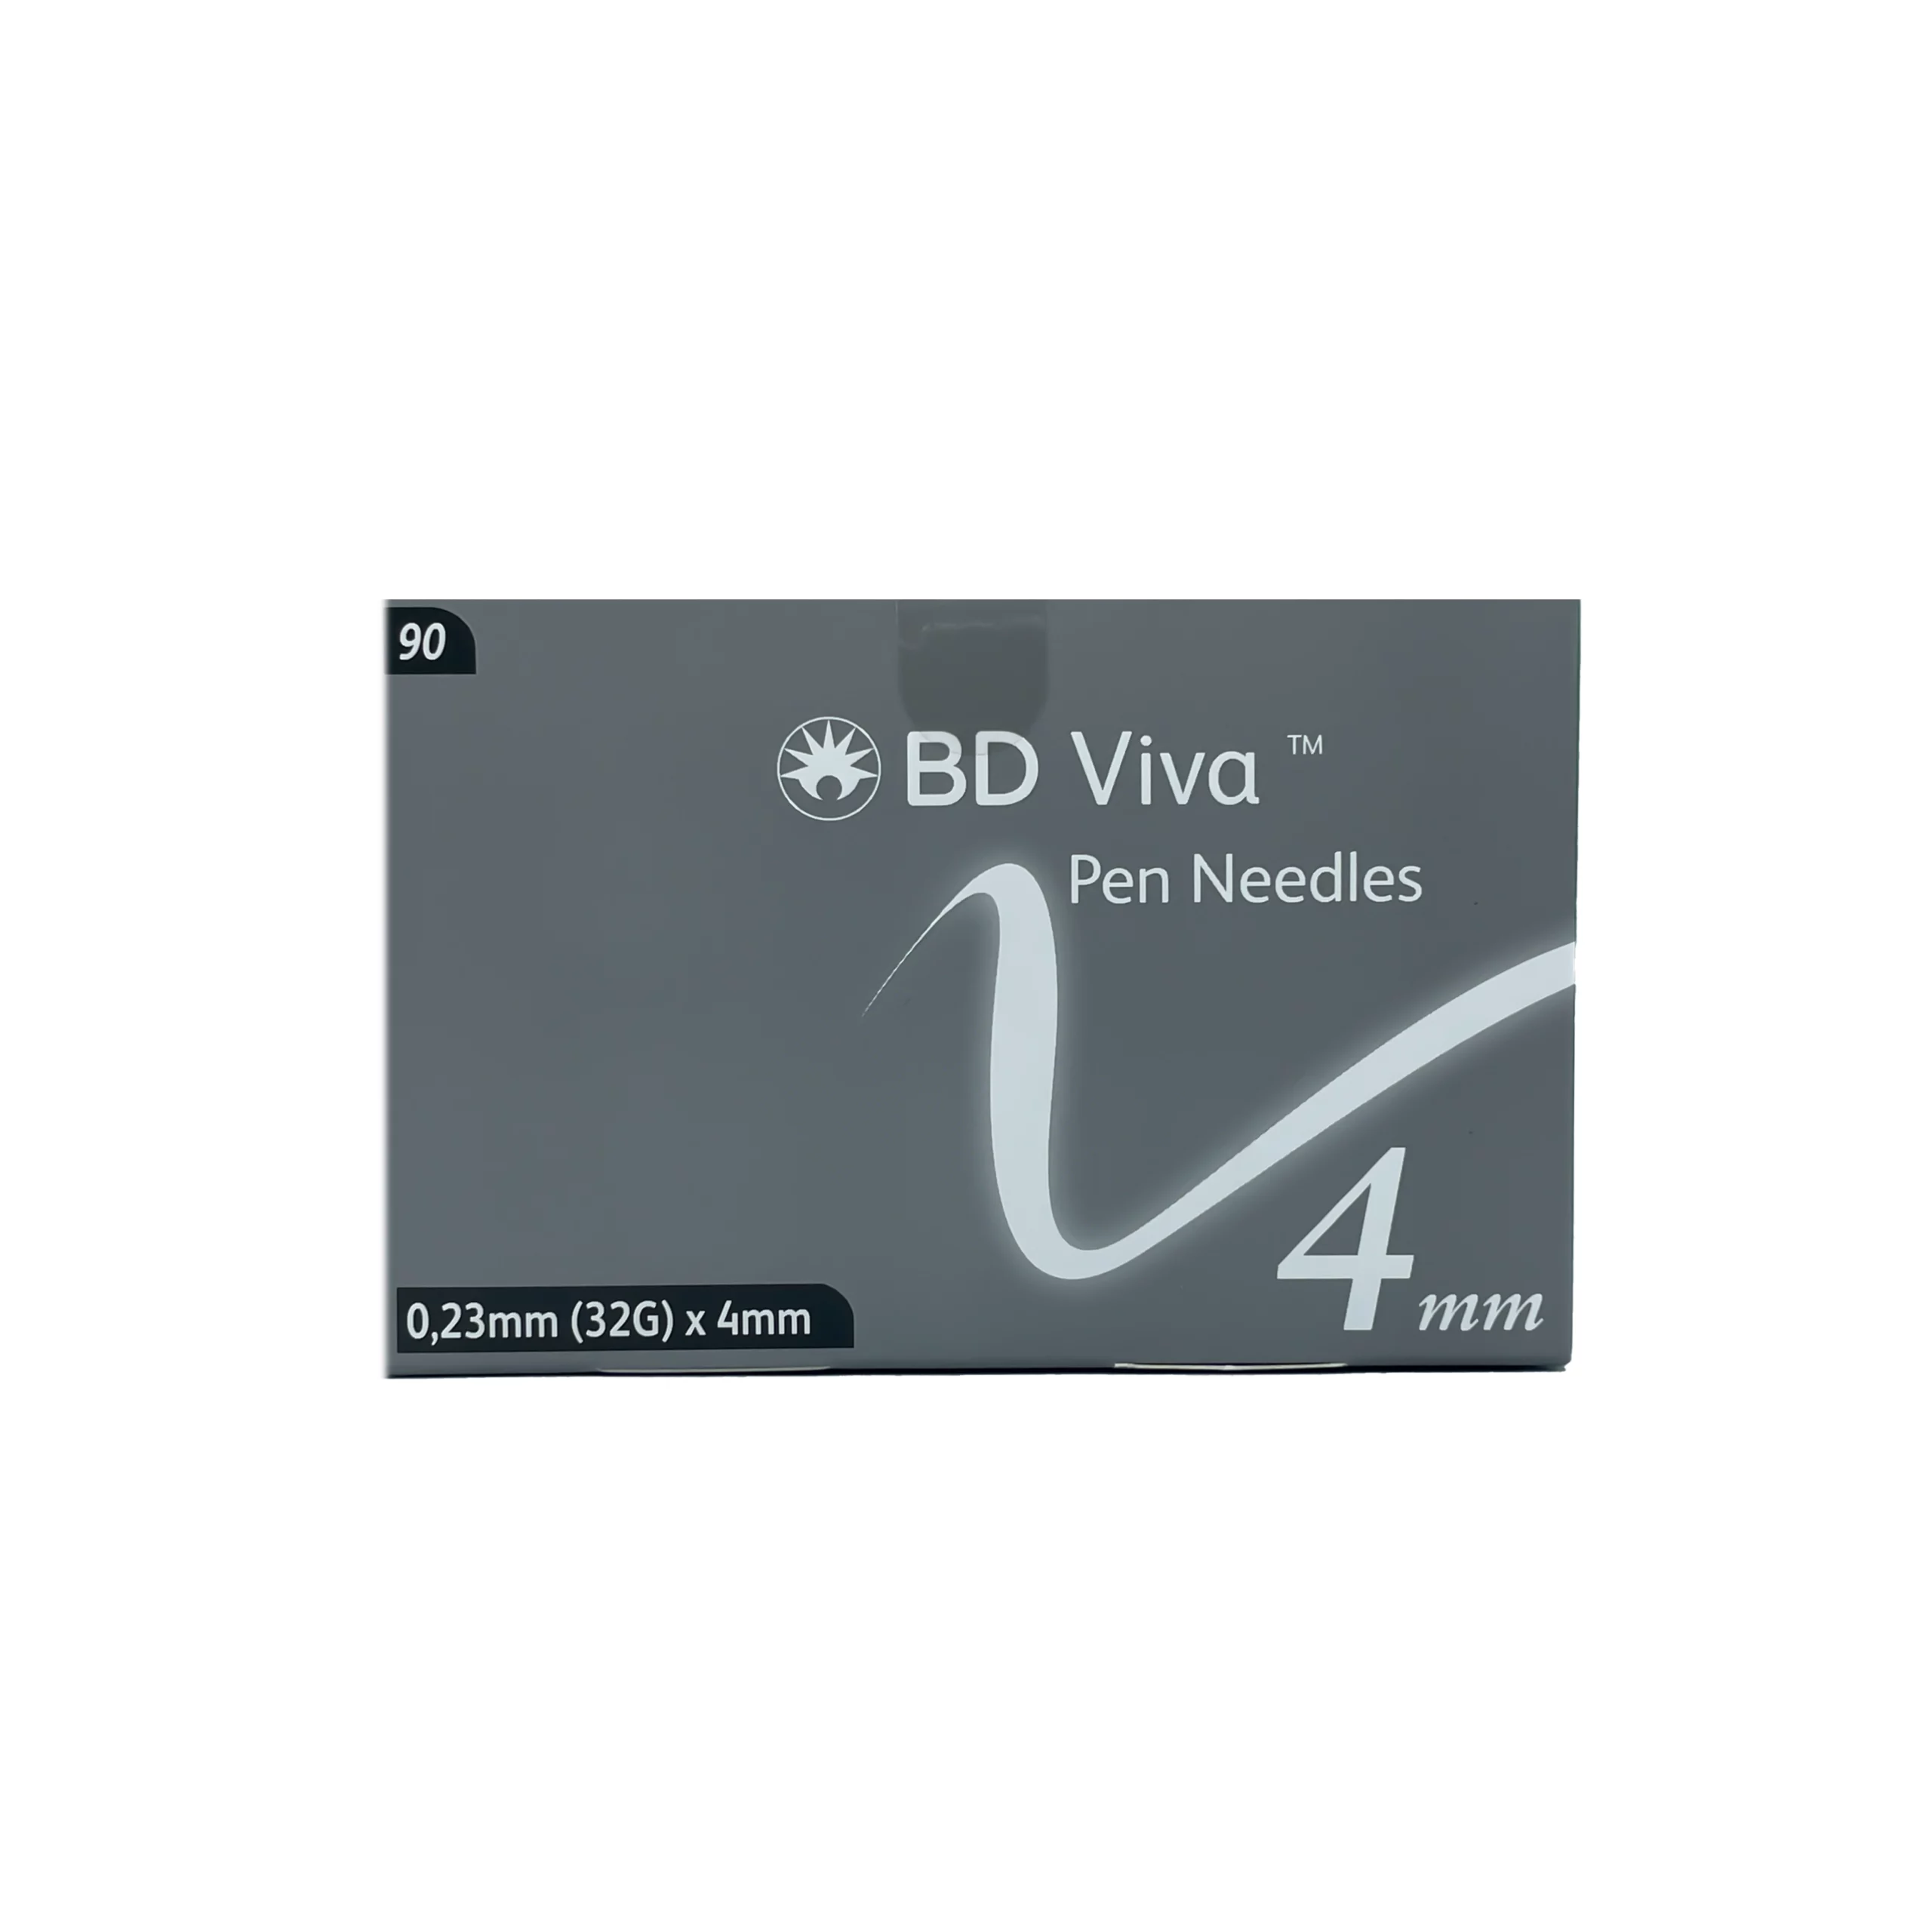 BD Viva 4mm Pen Needles (90)